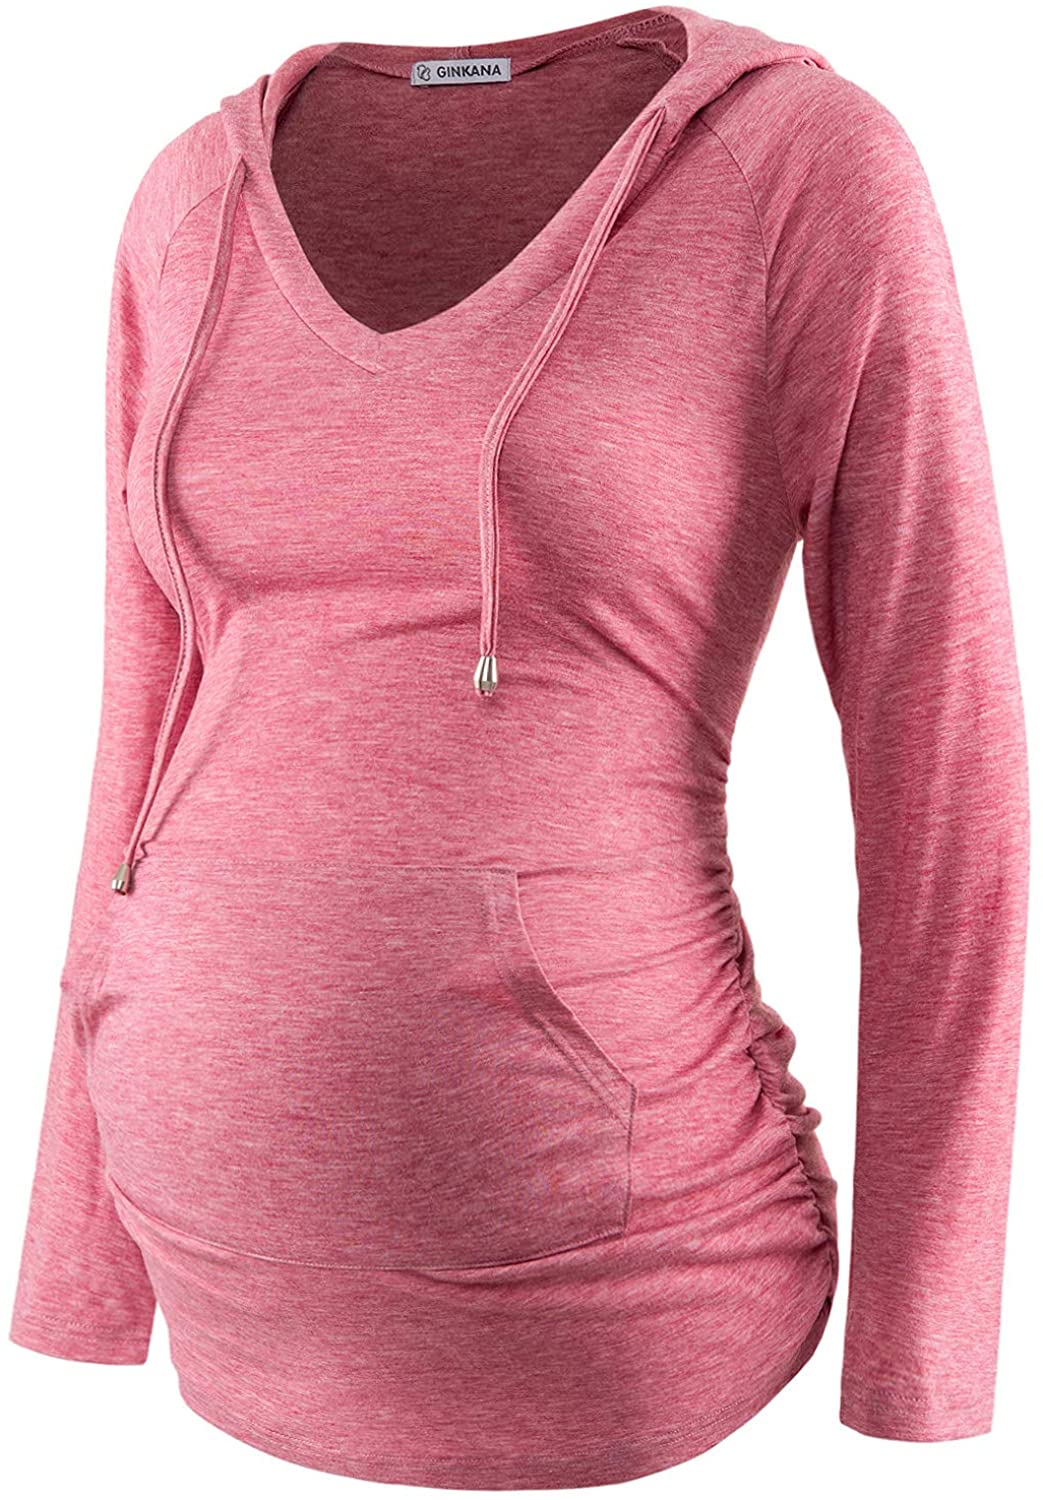 YIWOZA Womens Maternity Hoodie Long Sleeves Shirt Casual Vneck Top Pregnancy Sweatshirt Ruched Tunics 